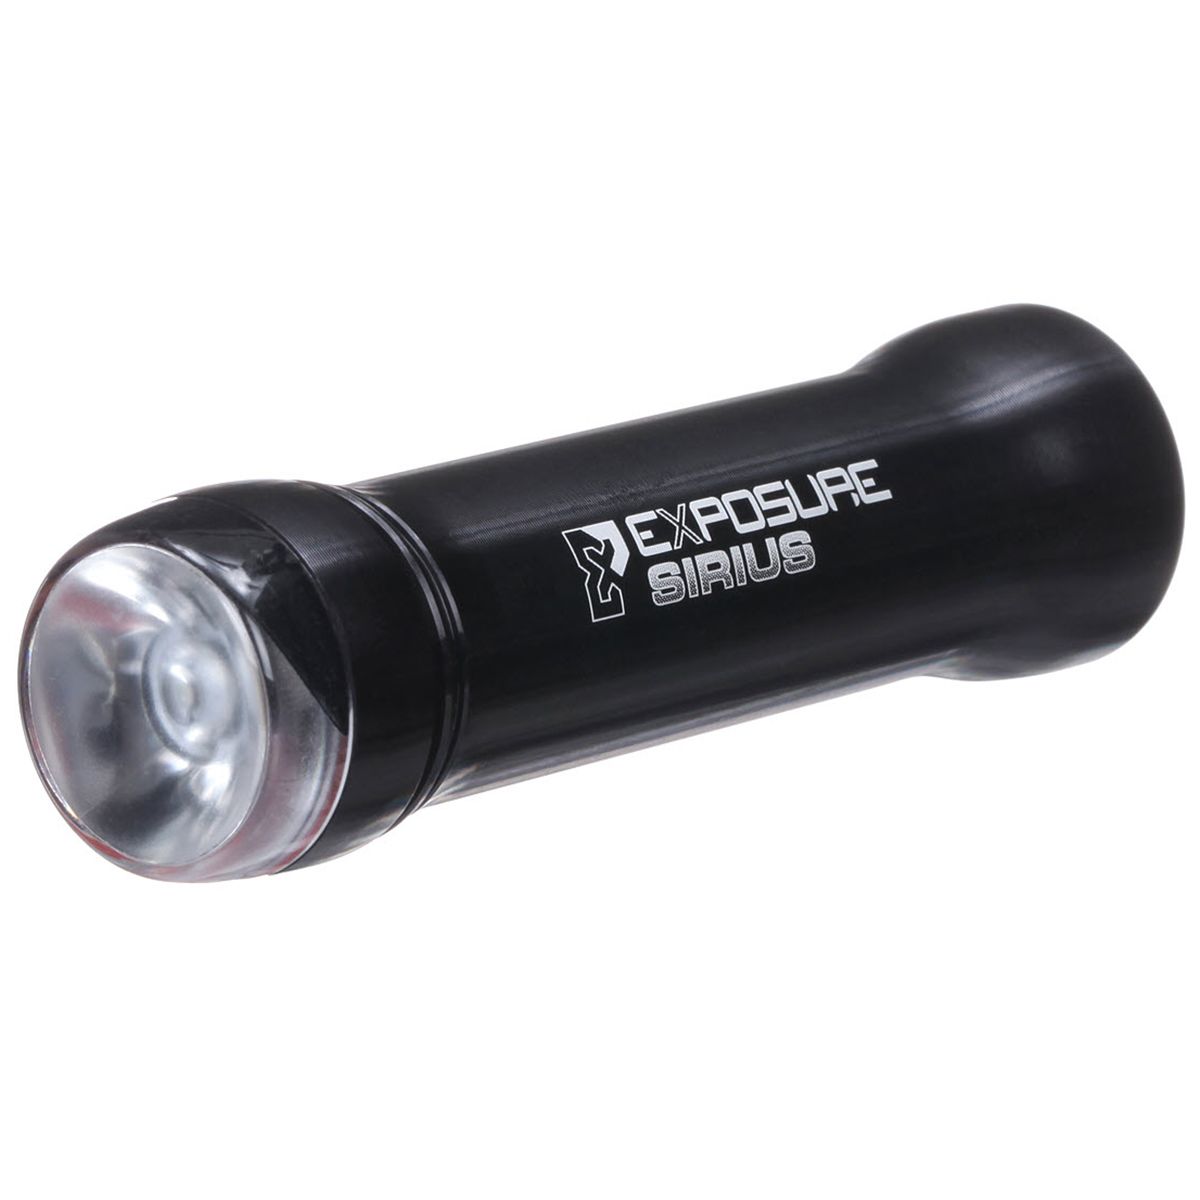 Exposure Sirius Mk5 Headlight with TraceR Tail Light